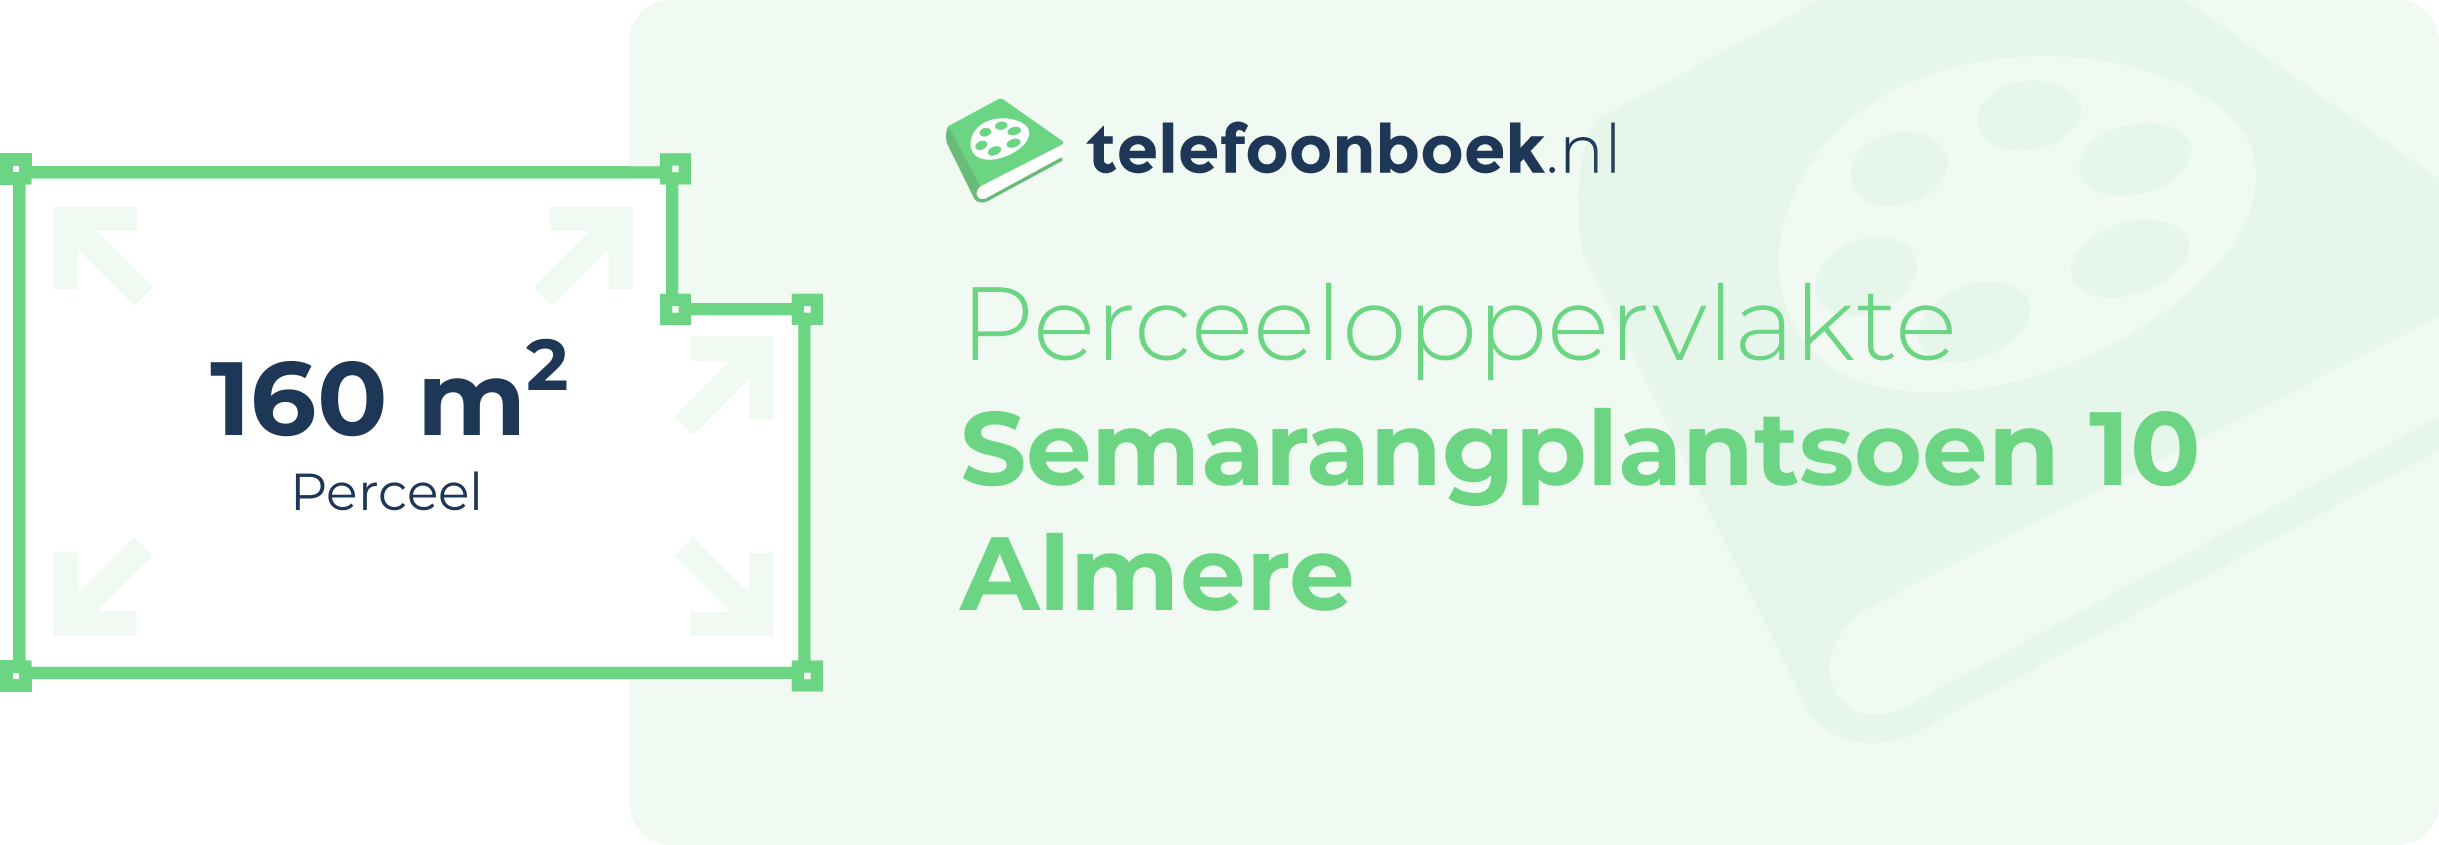 Perceeloppervlakte Semarangplantsoen 10 Almere